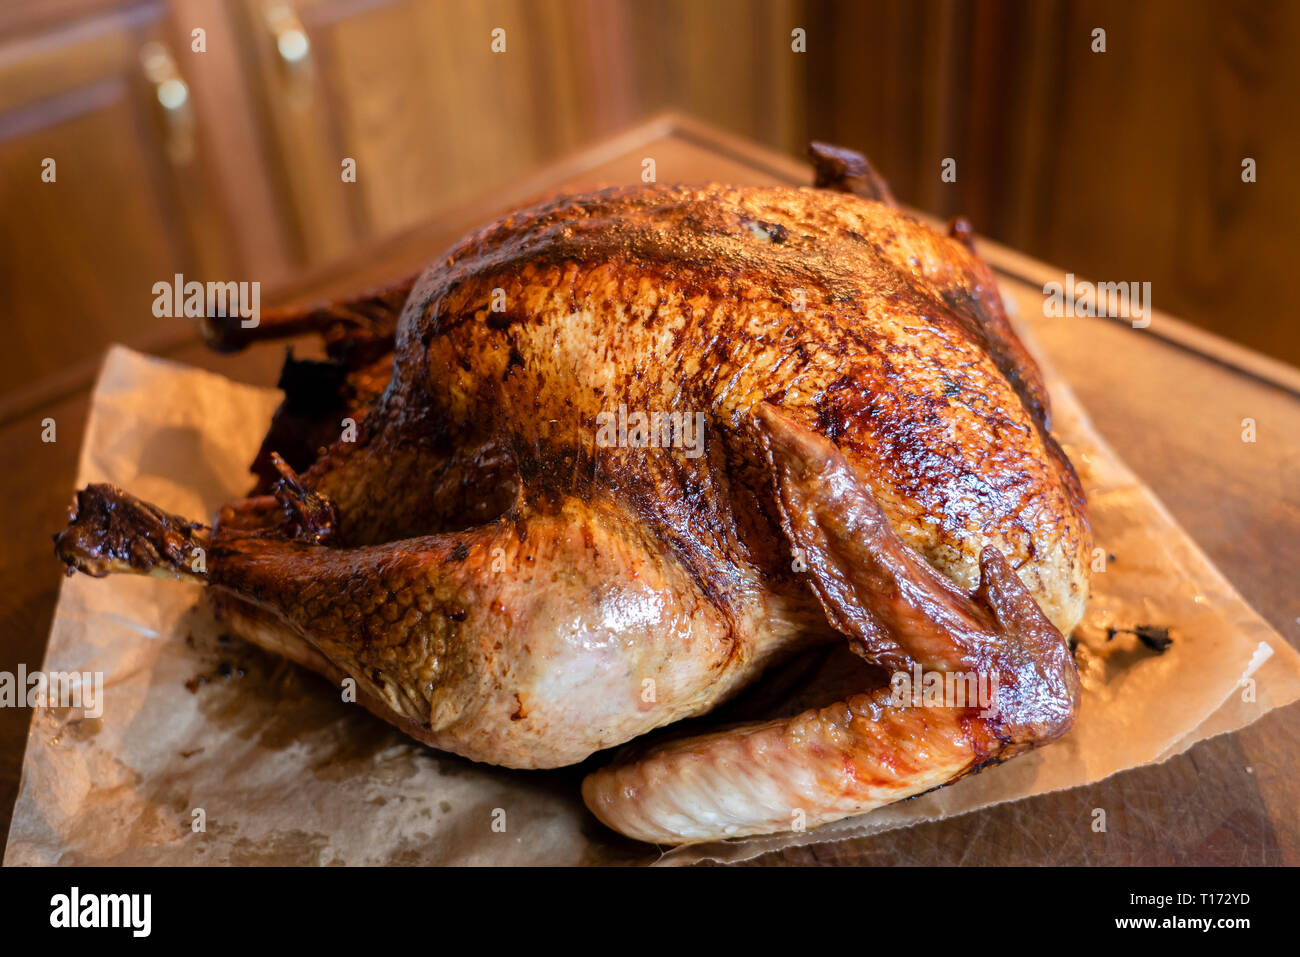 https://c8.alamy.com/comp/T172YD/traditional-baked-turkey-T172YD.jpg